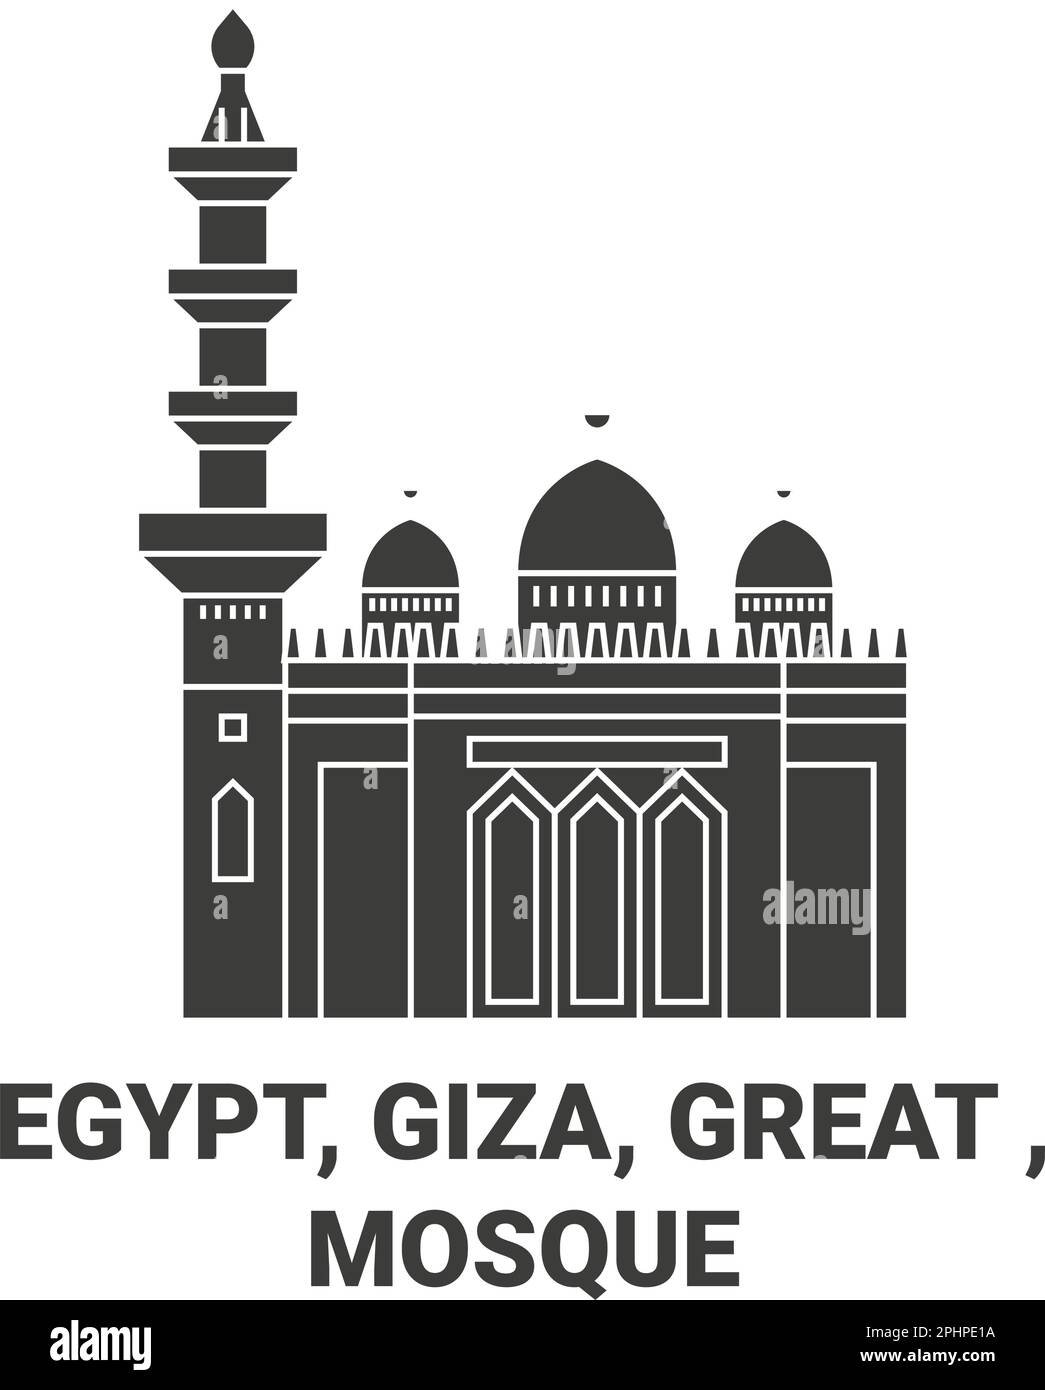 Égypte, Giza, Grande, Mosquée Voyage repère illustration de vecteur Illustration de Vecteur